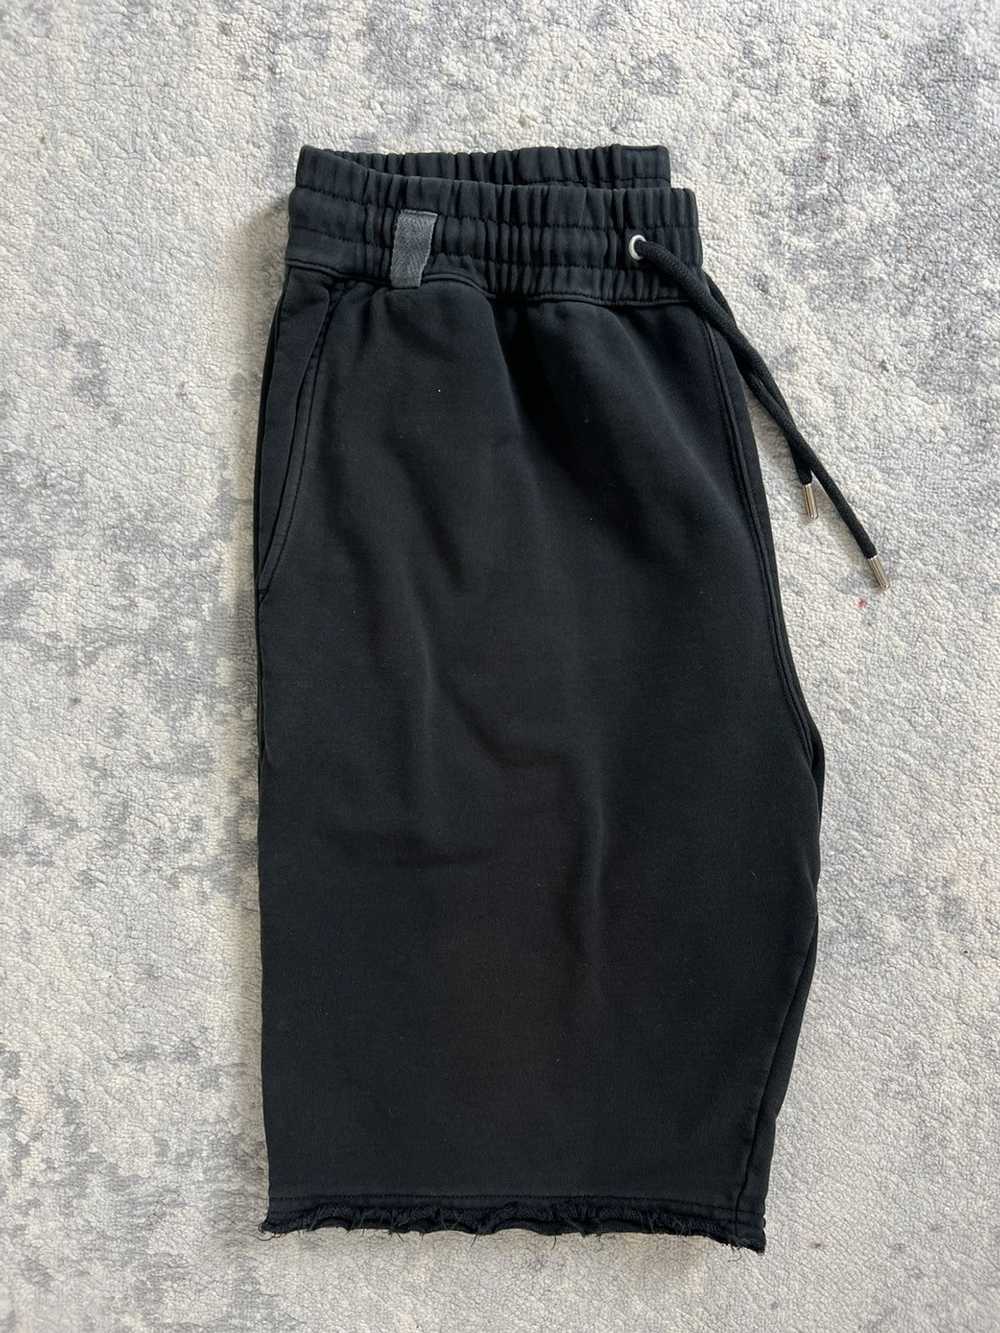 Helmut Lang Helmut Lang Jersey Cotton Shorts - image 4